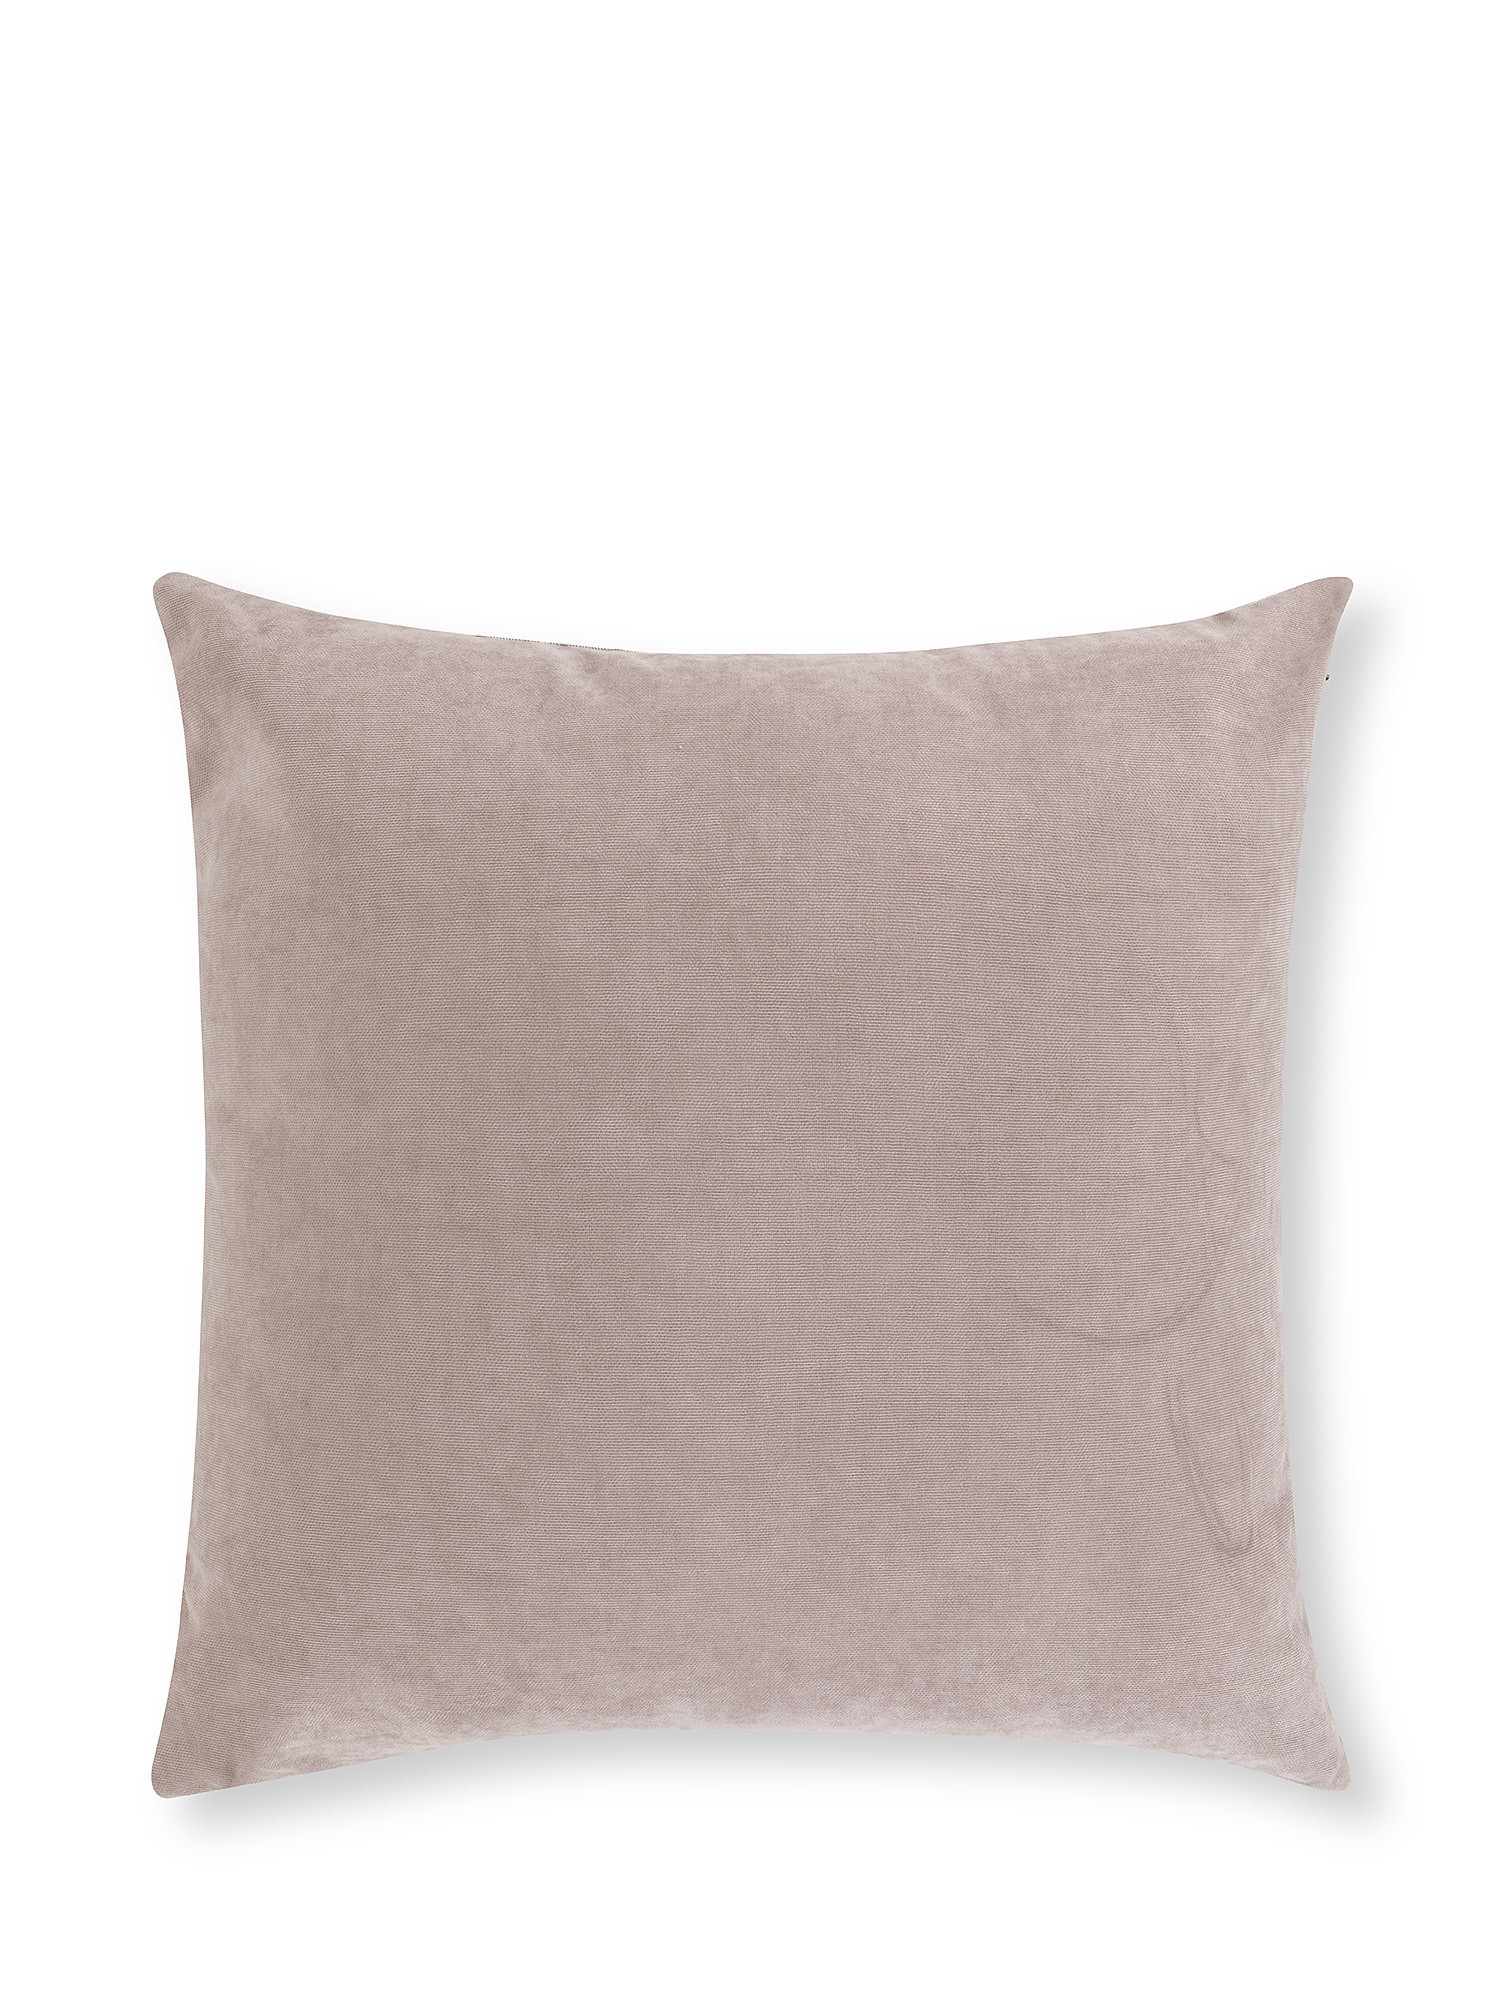 Jacquard cushion with ramage motif 45x45cm, Grey, large image number 1